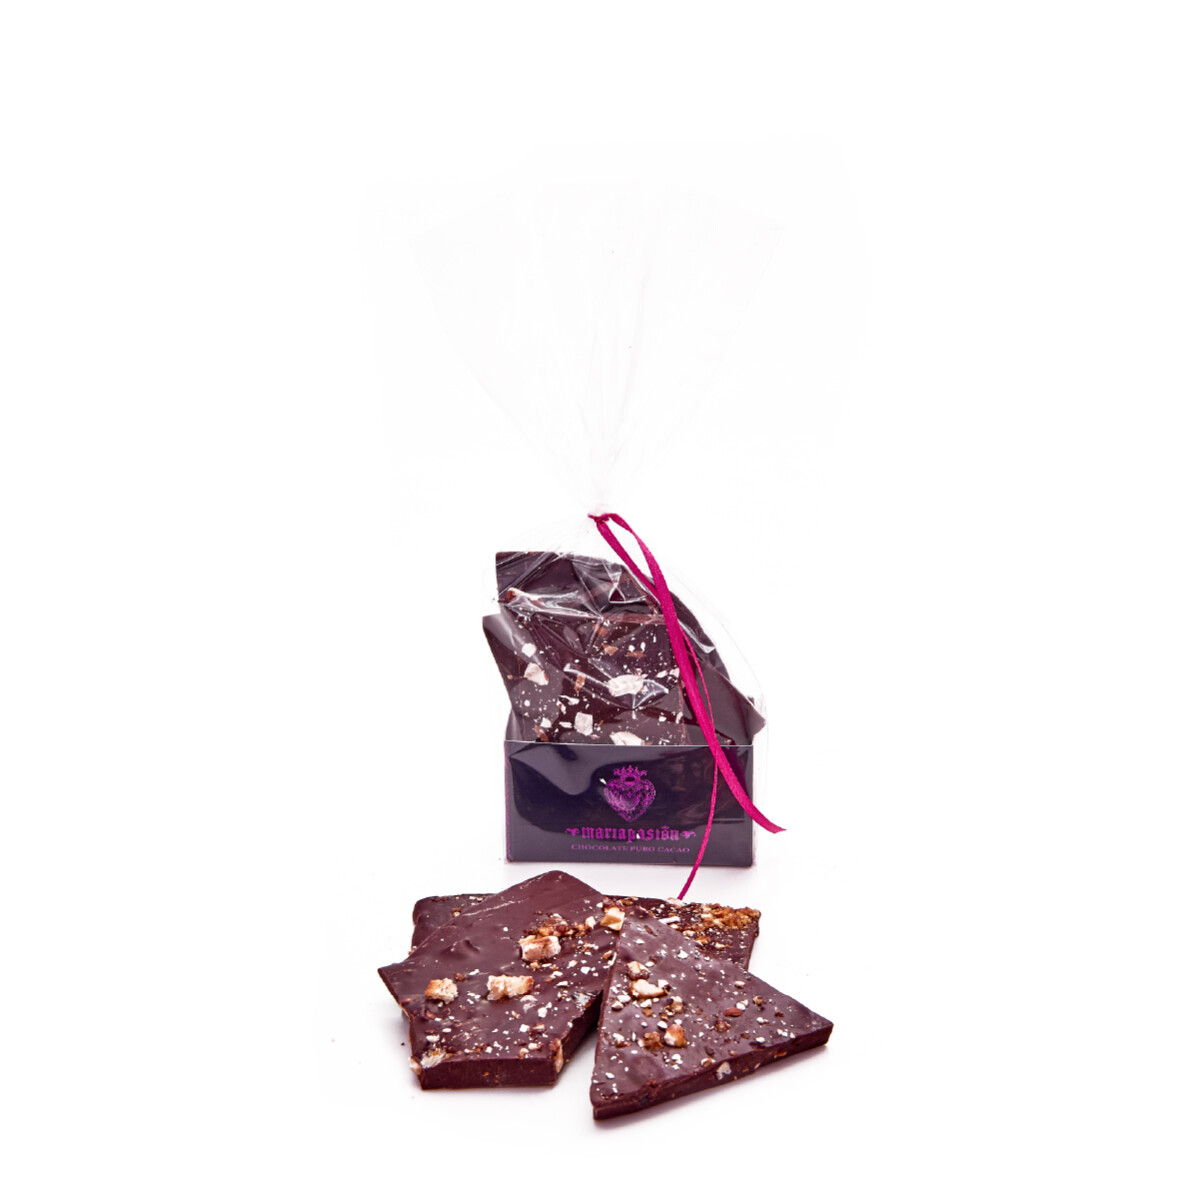 Tartona Pack Chocolate Amargo 58% Puro Cacao. 110grs. SIN AZÚCAR 